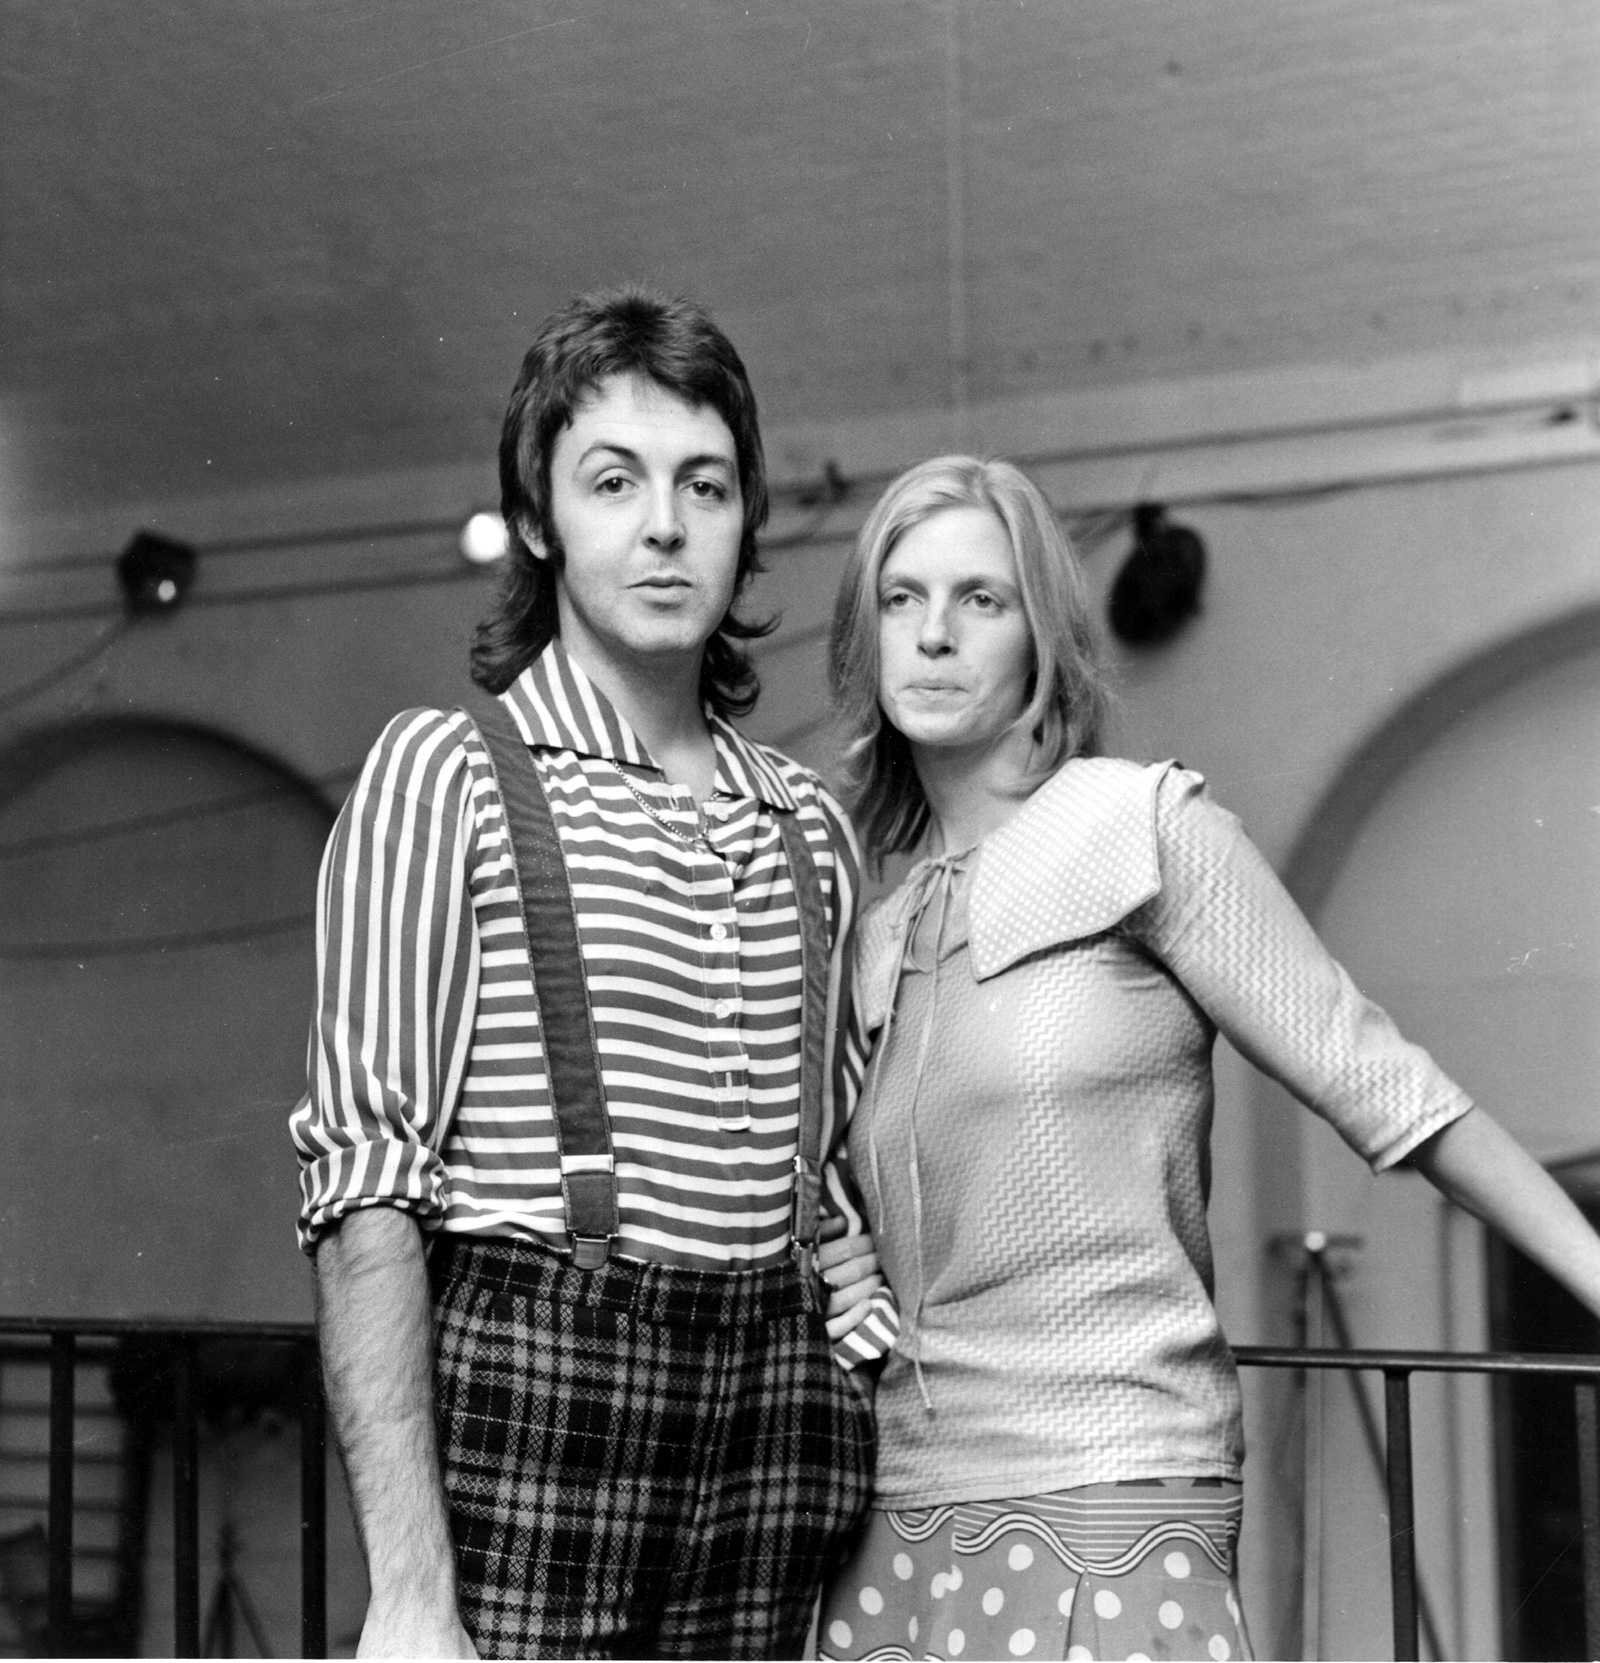 Paul McCartney at 80: A life of fun-loving fashion - CNN Style